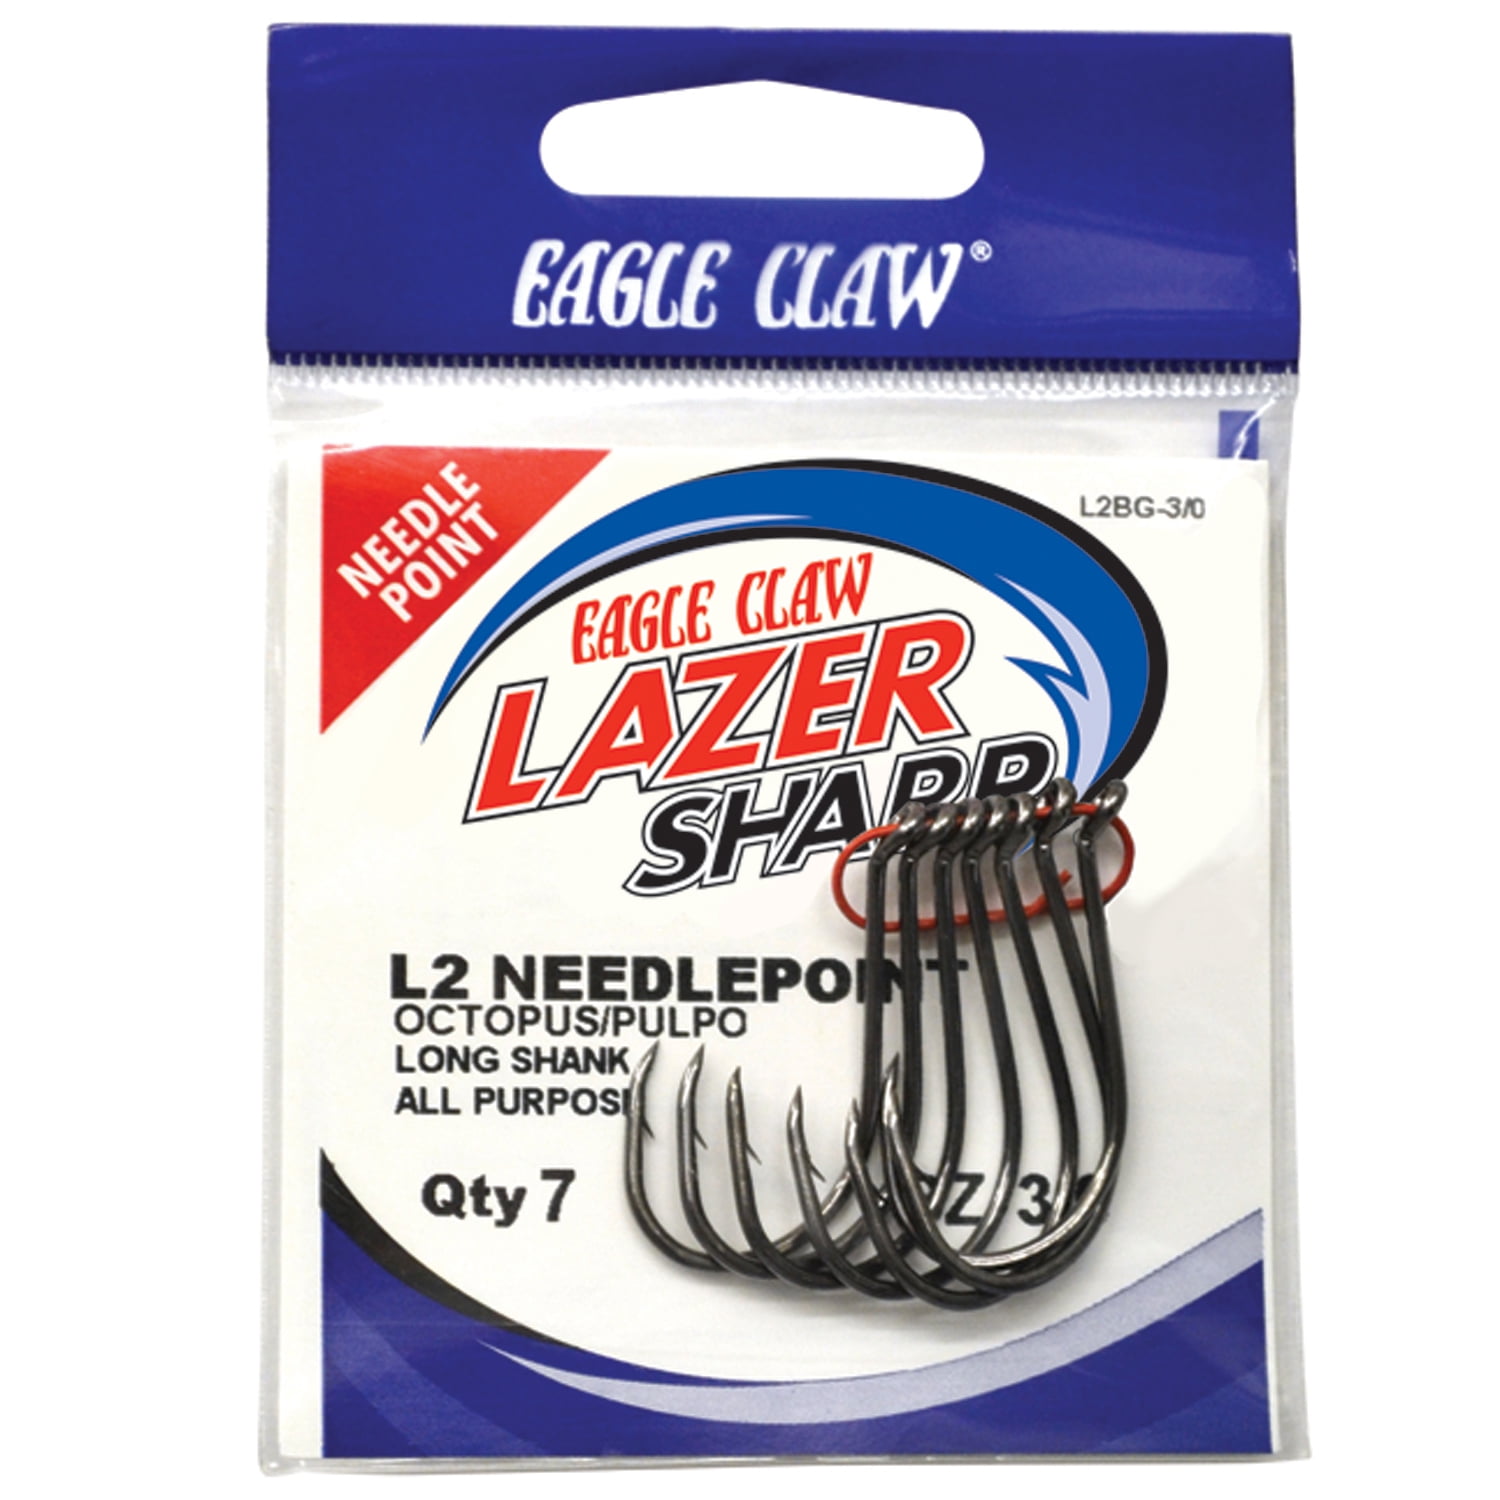 eagle claw lazer sharp L2 needlepoint long shank all purpose size 5/0 L2BG-5/0 